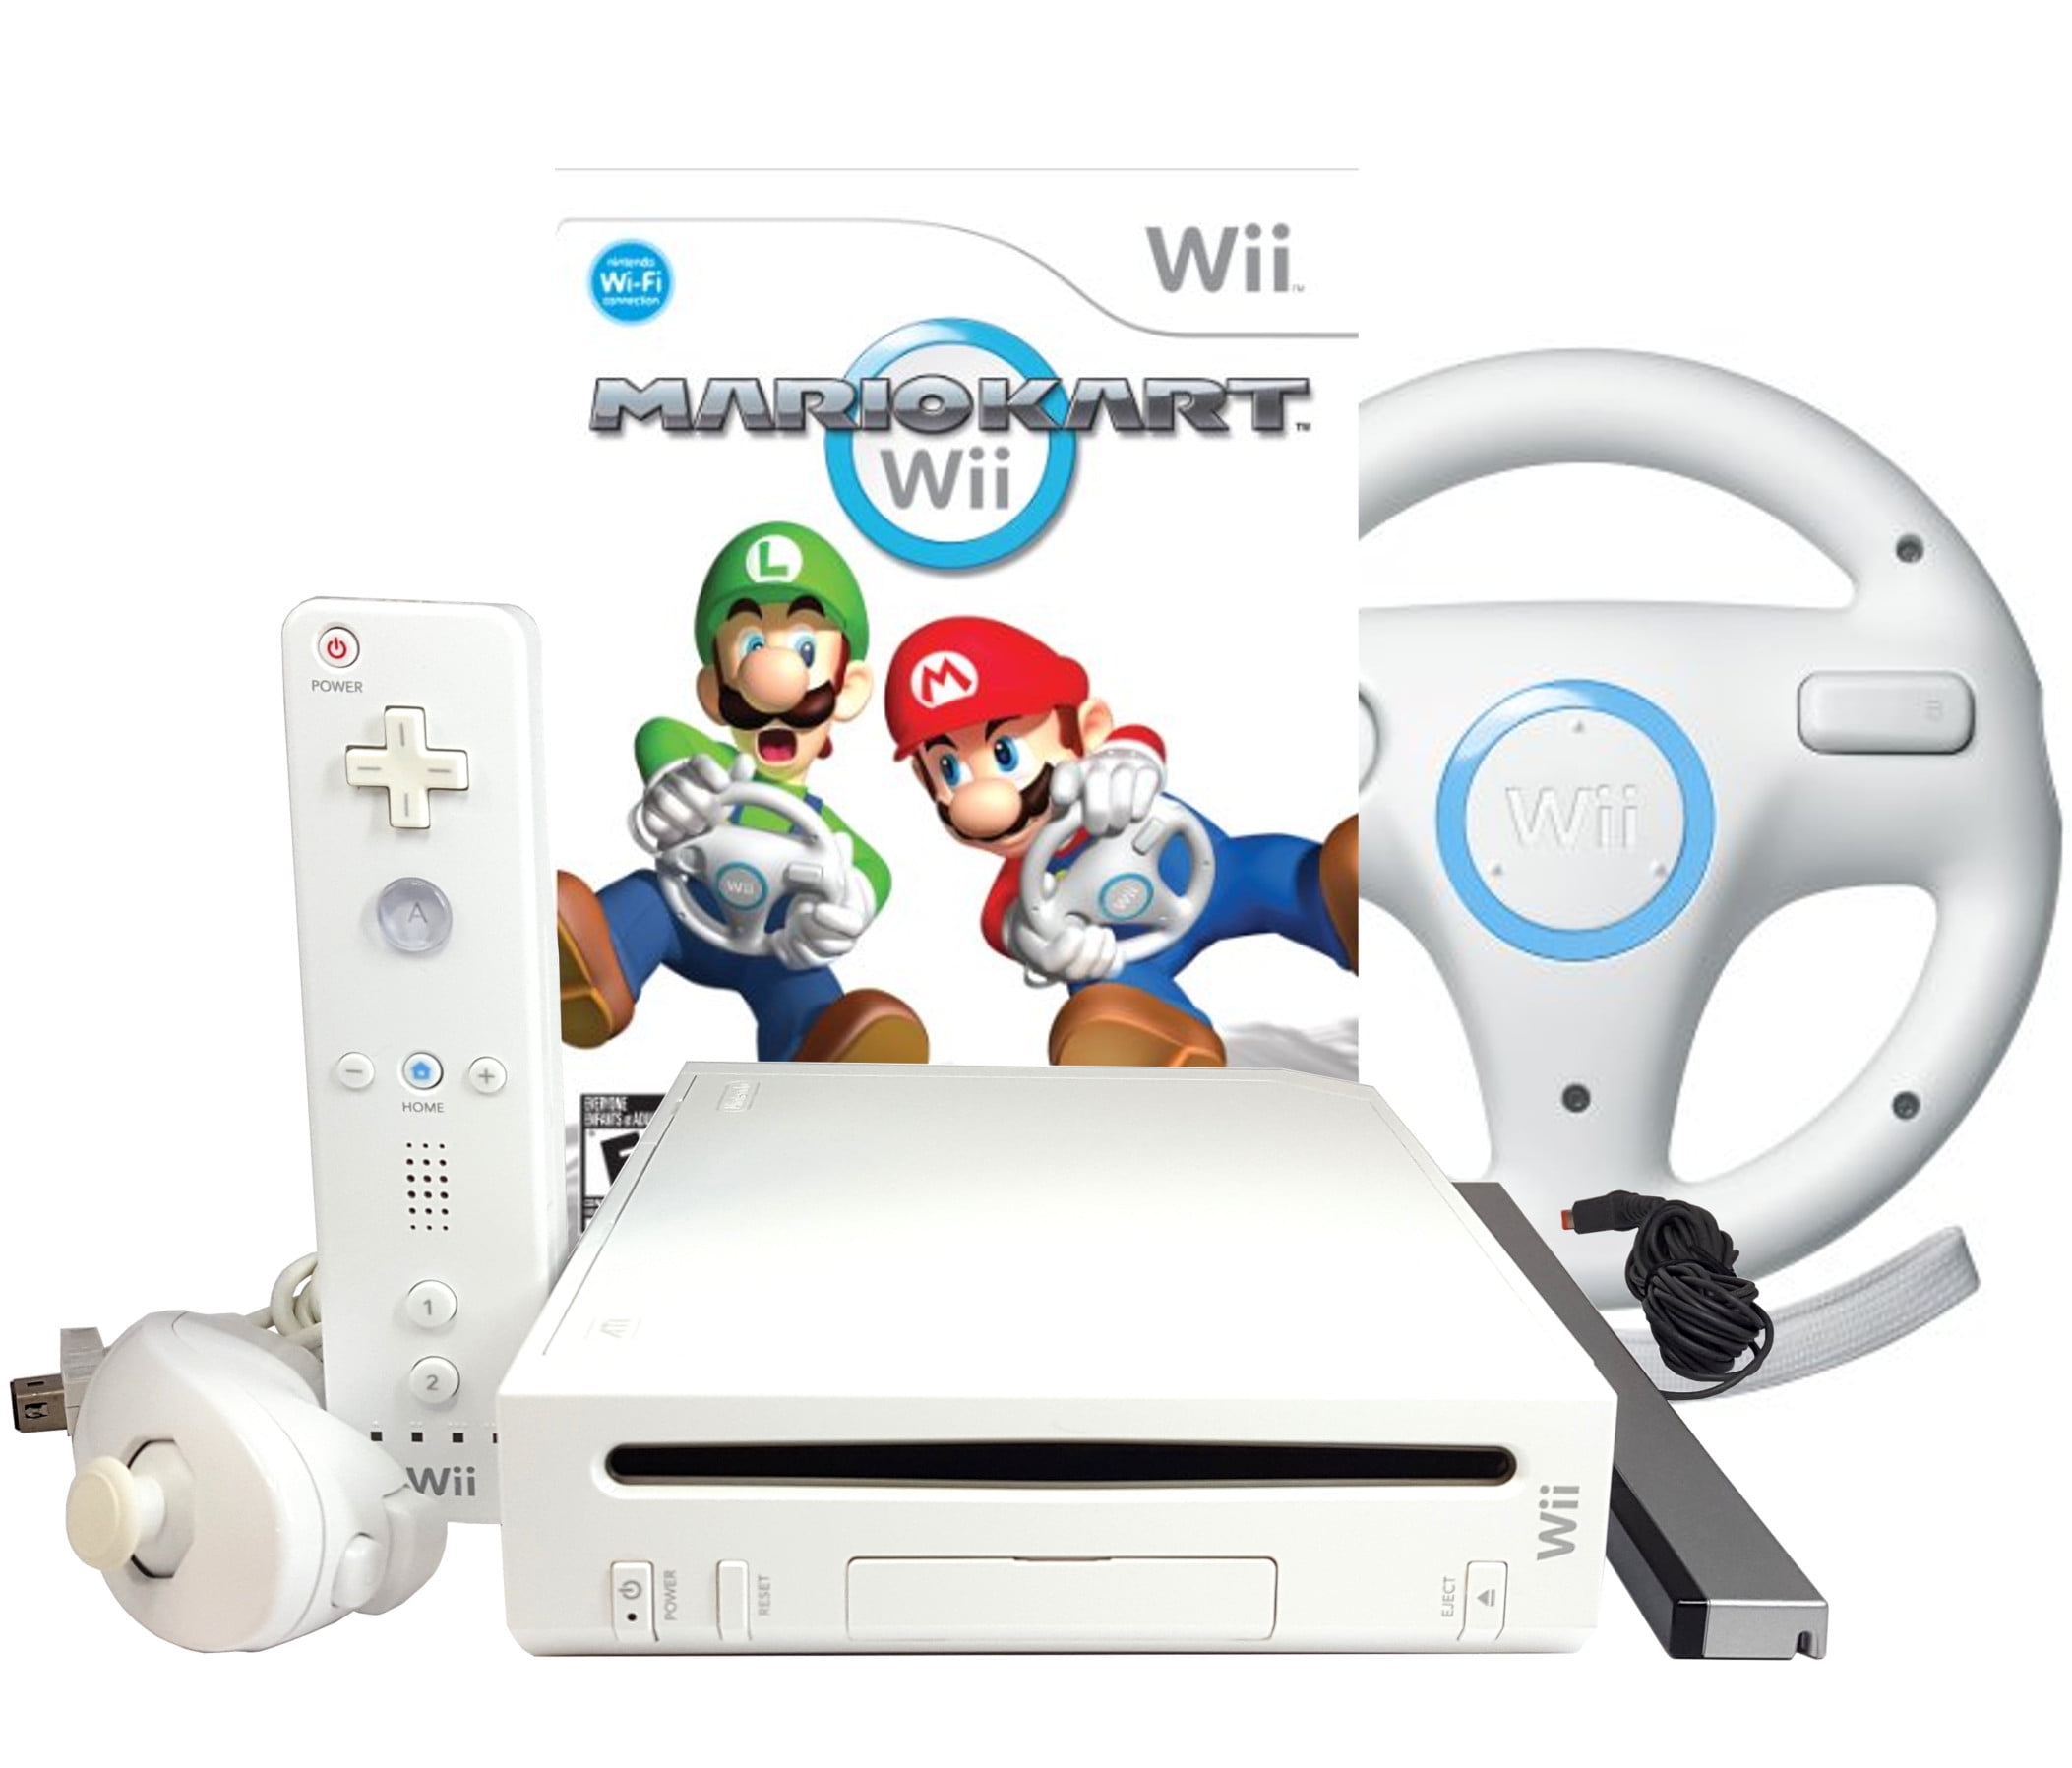 streng Menagerry Justitie Restored Nintendo Wii Console Mario Kart Wii and Wheel - White  (Refurbished) - Walmart.com